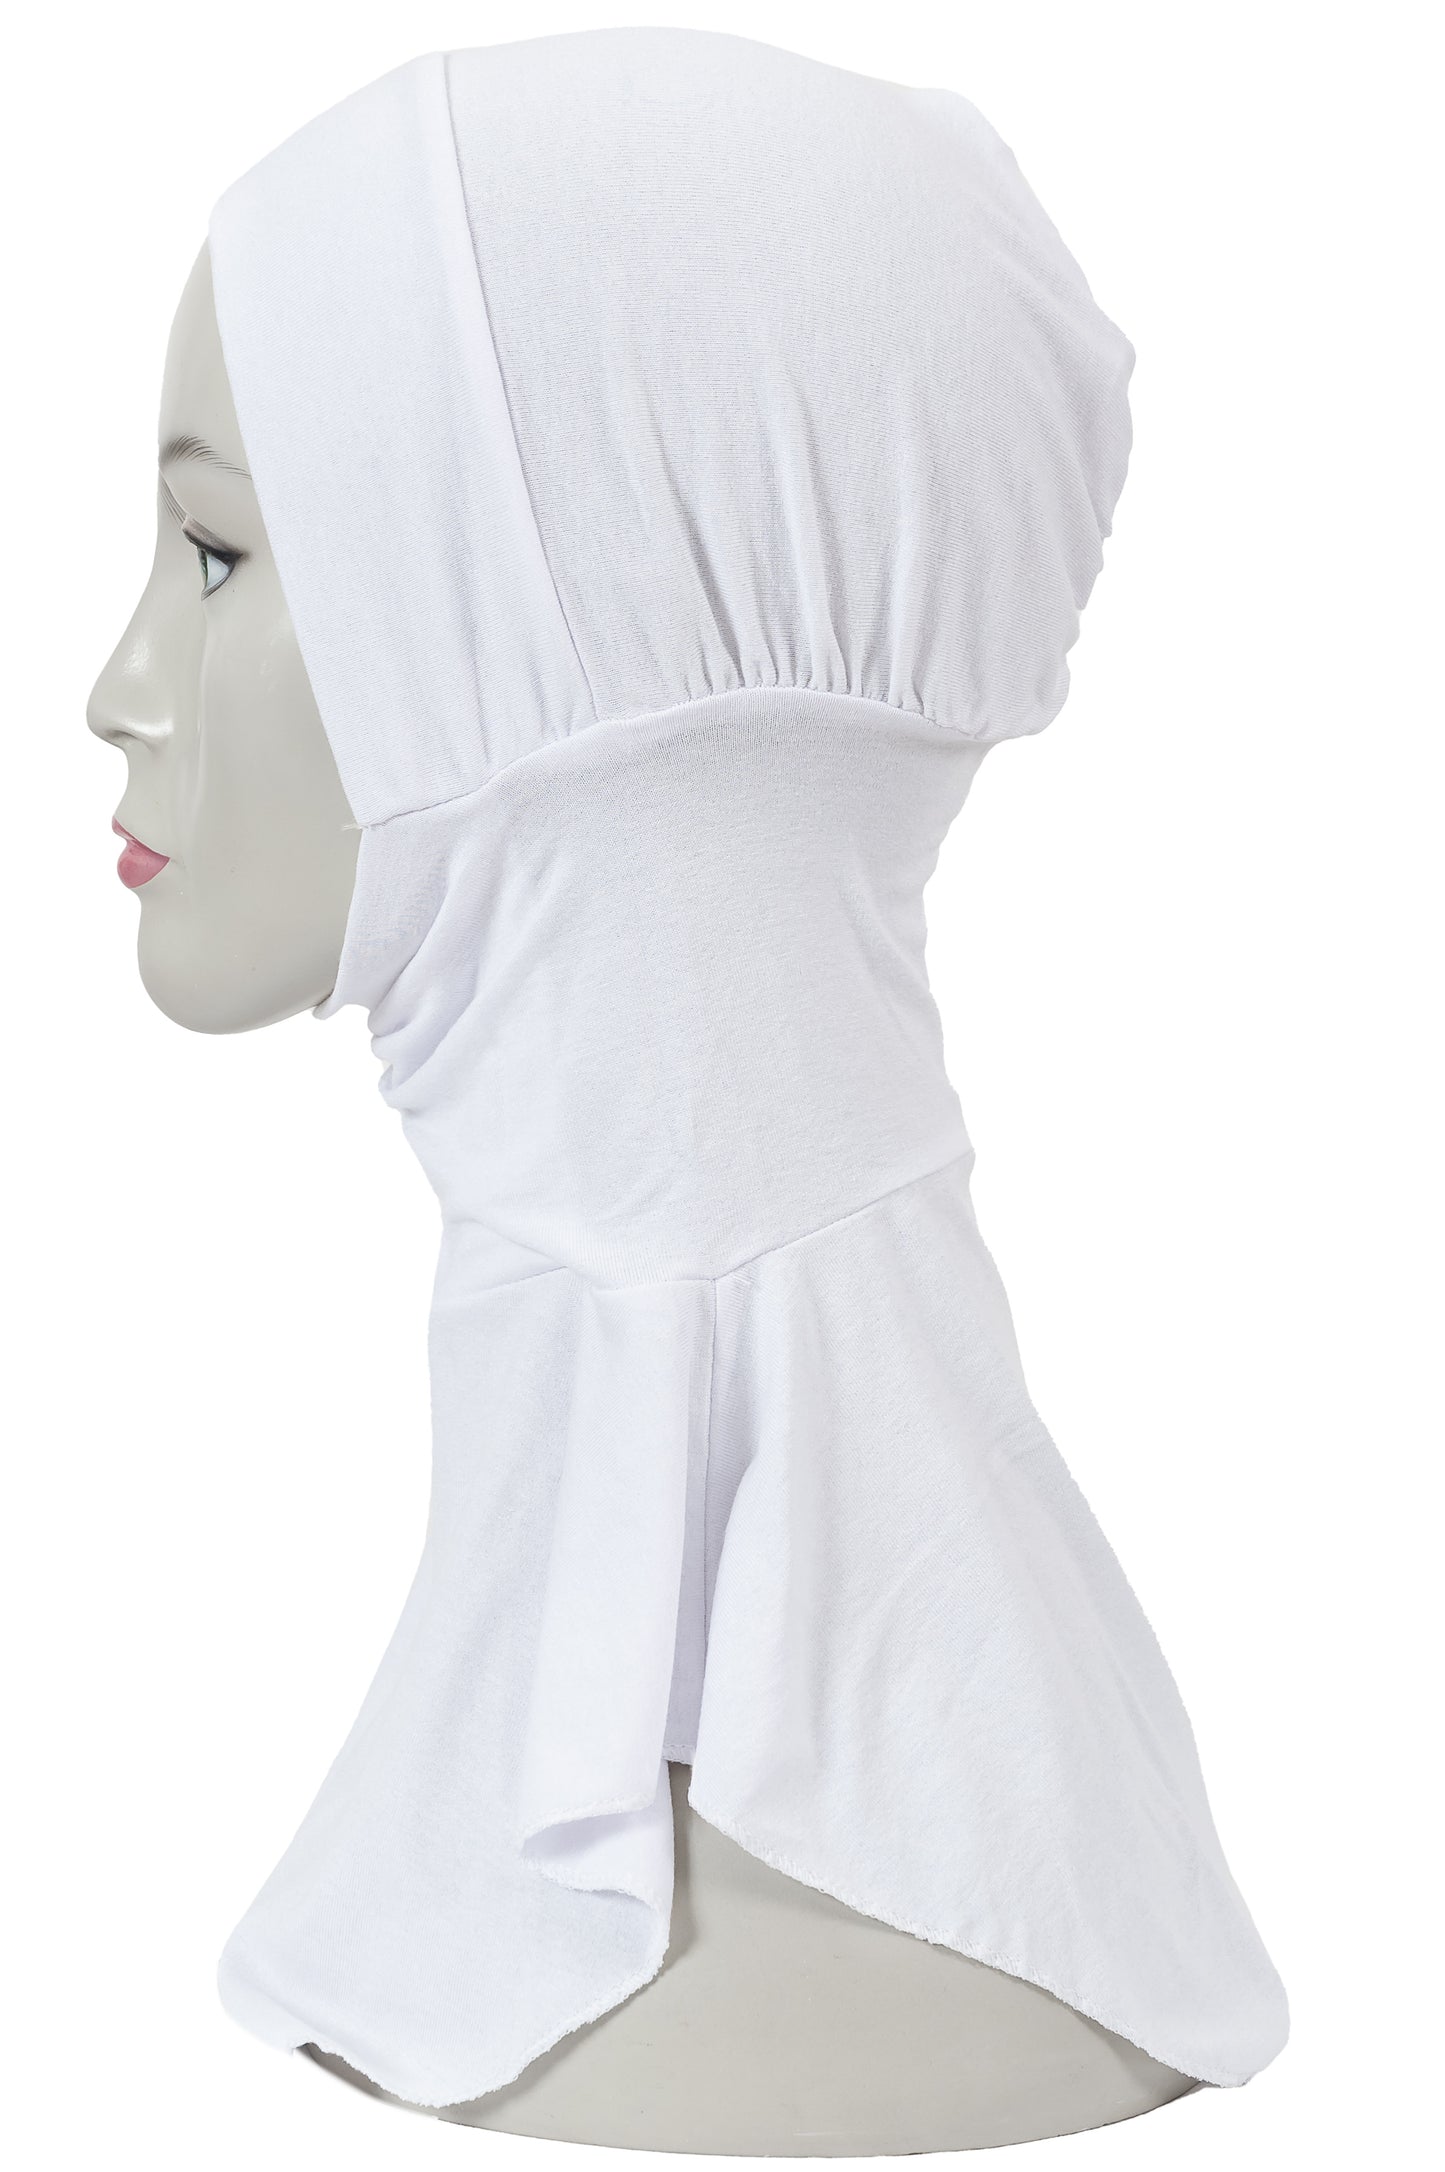 New- Ninja Cotton Cap in White